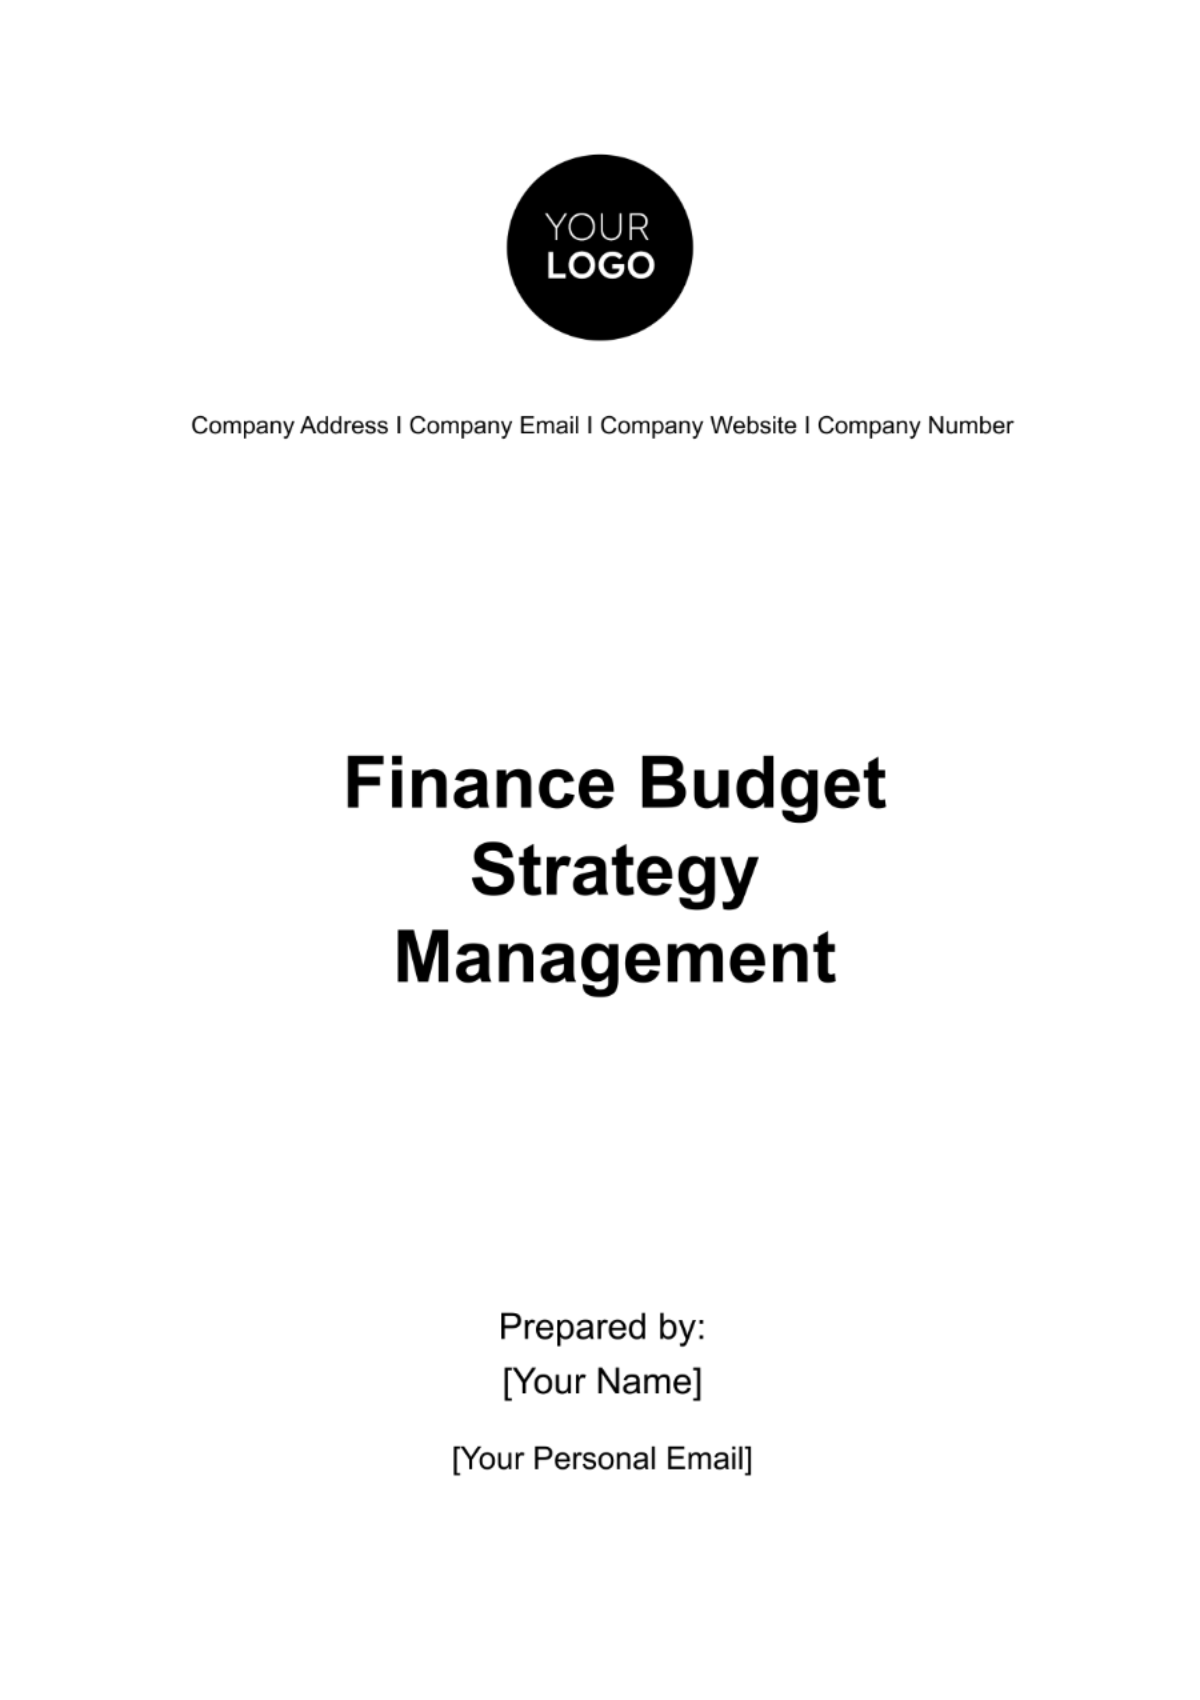 Finance Budget Strategy Management Template